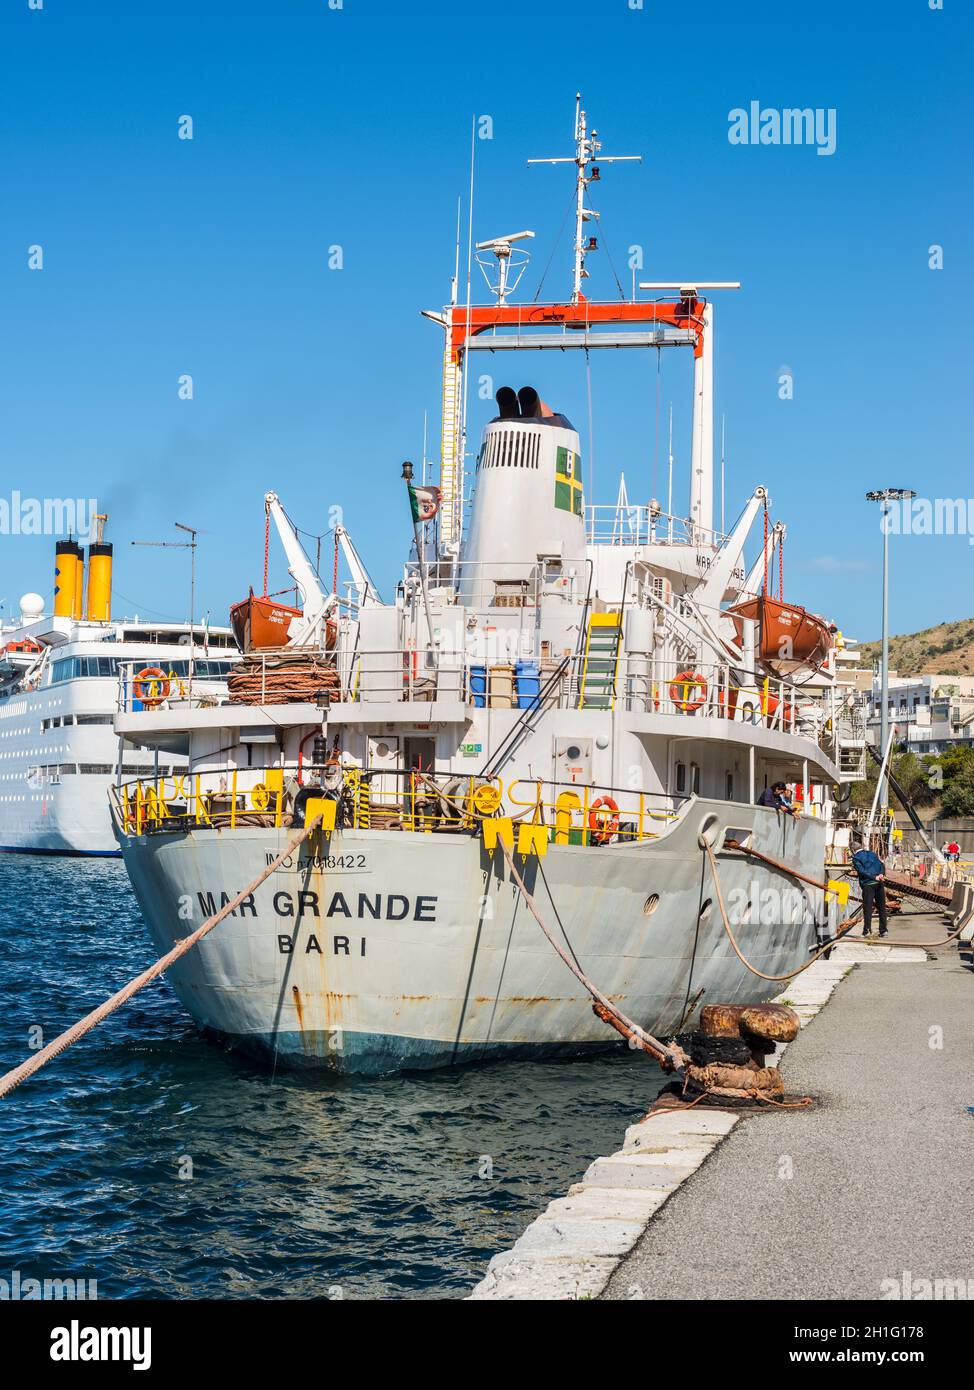 Reggio Calabria, Italy - October 30, 2017: Cement Carrier Vessel Mar Grande at port of Reggio Calabria, in Italy. Stock Photo